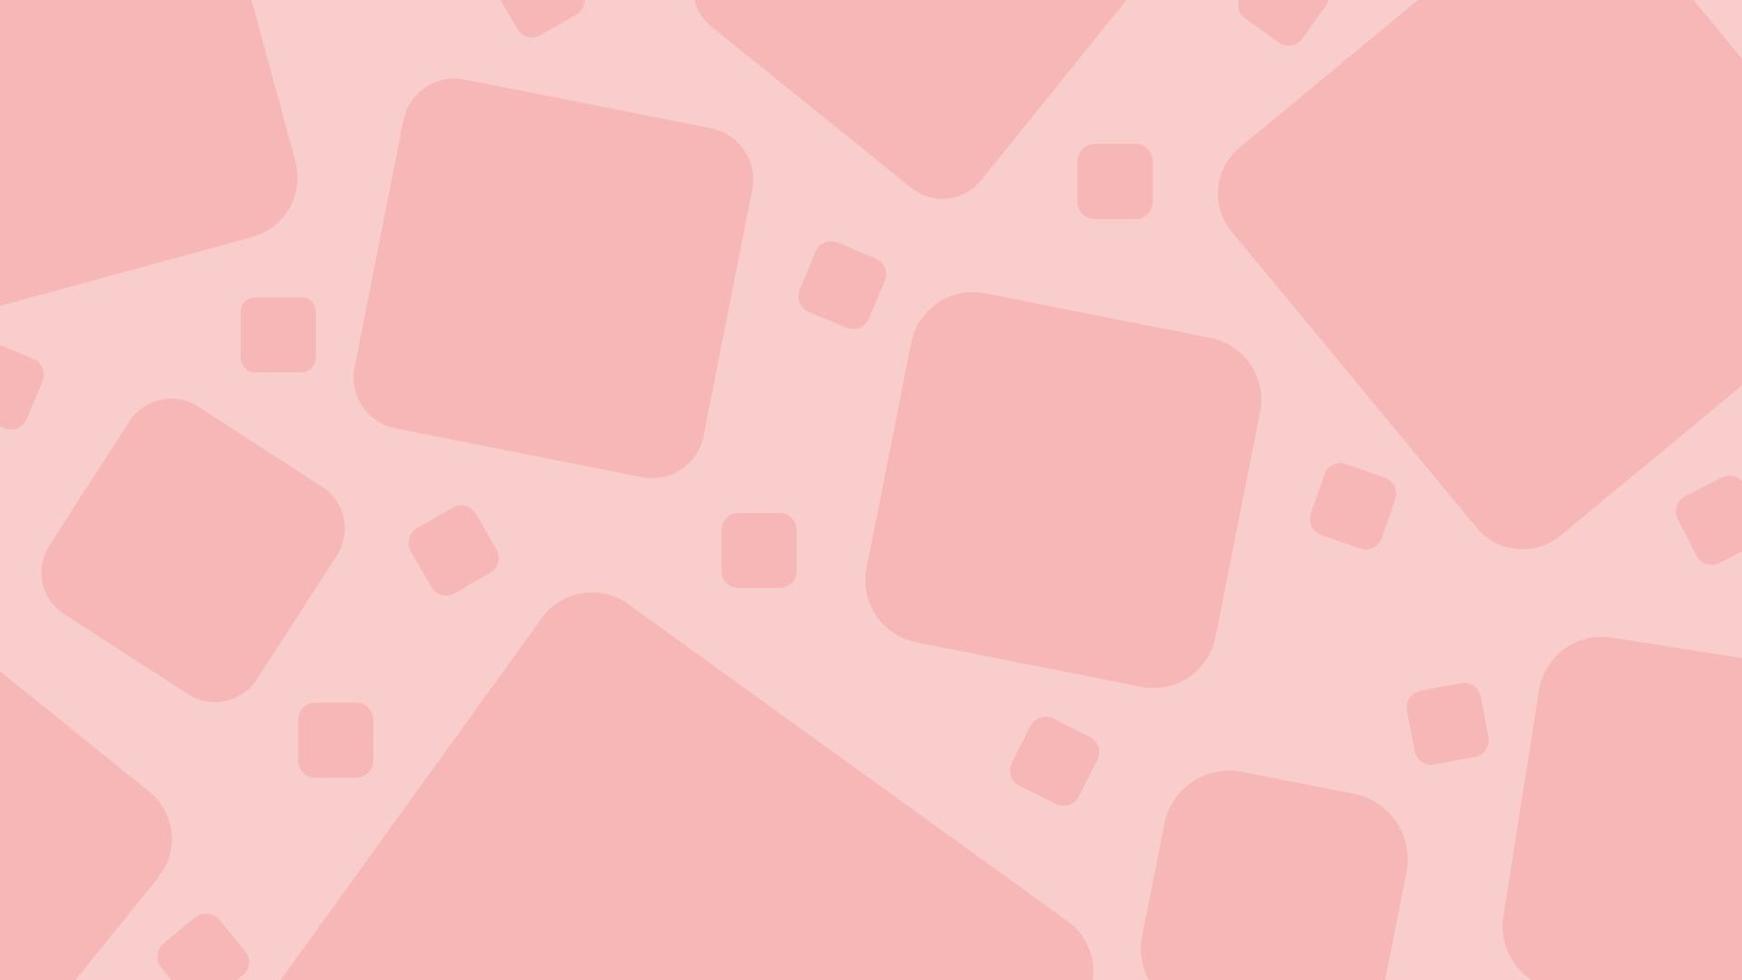 Pink squares geometric background. Vector illustration.